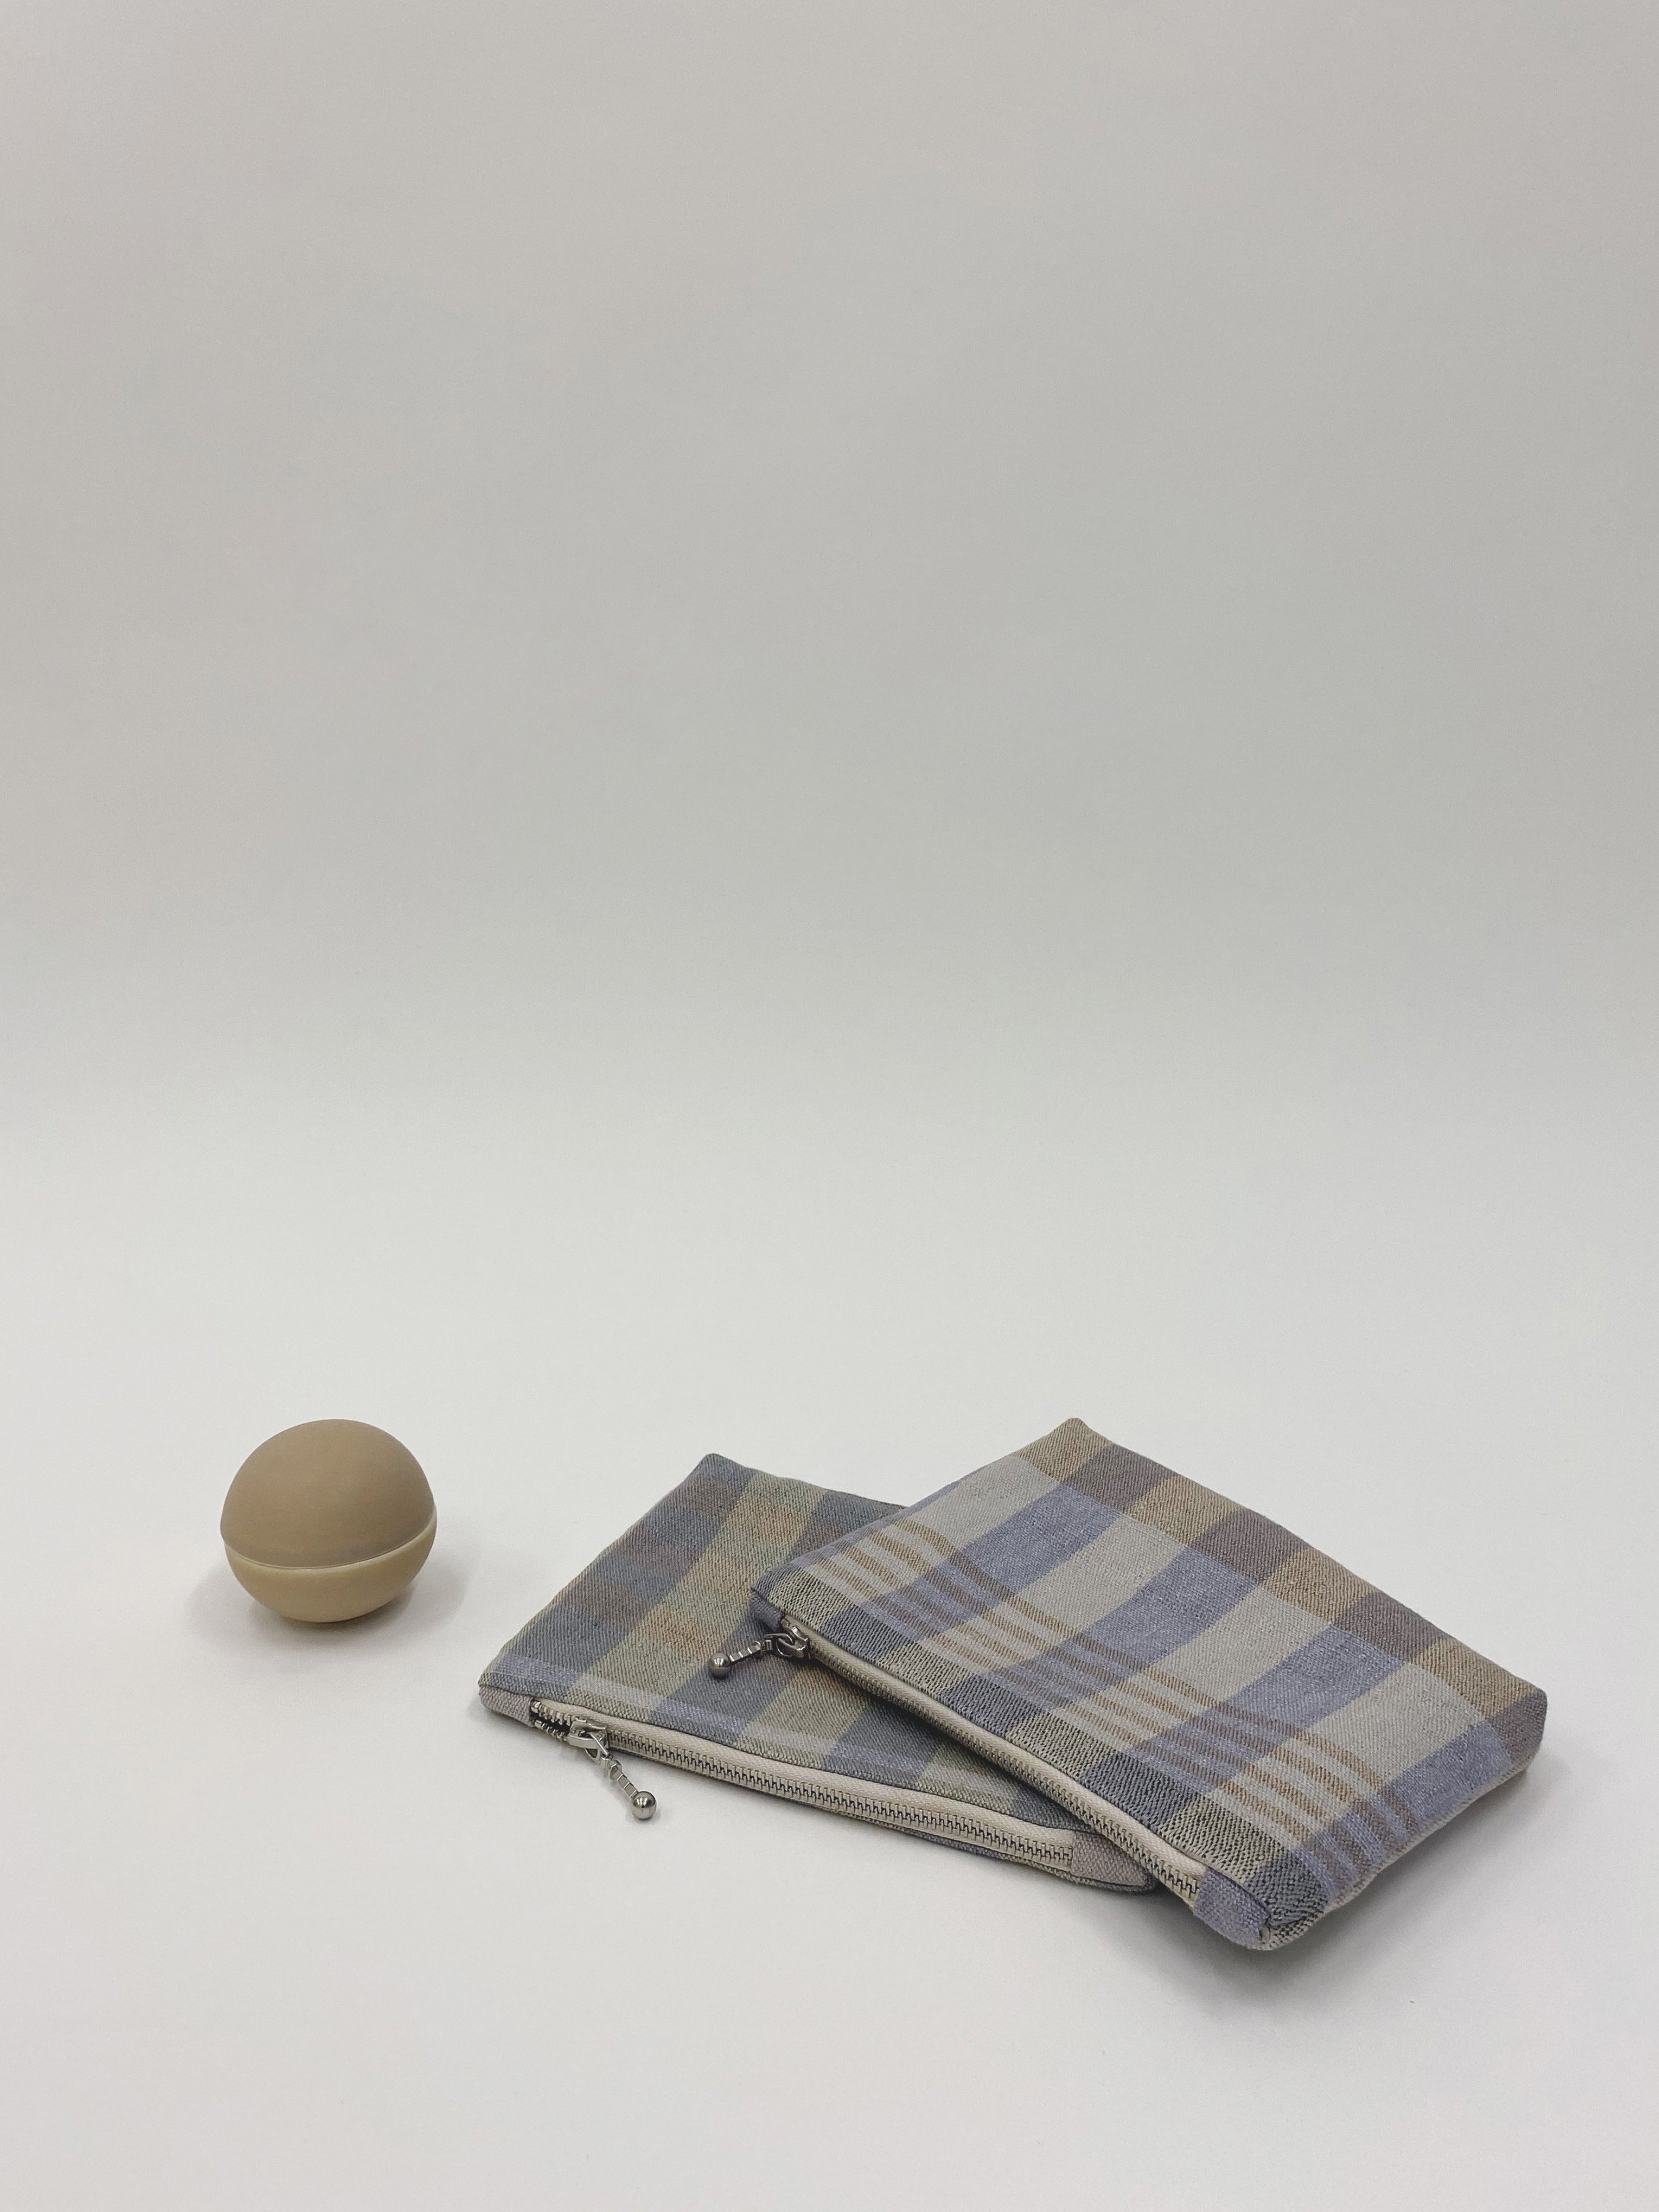 Handwoven pouch / wallet in tartan linen